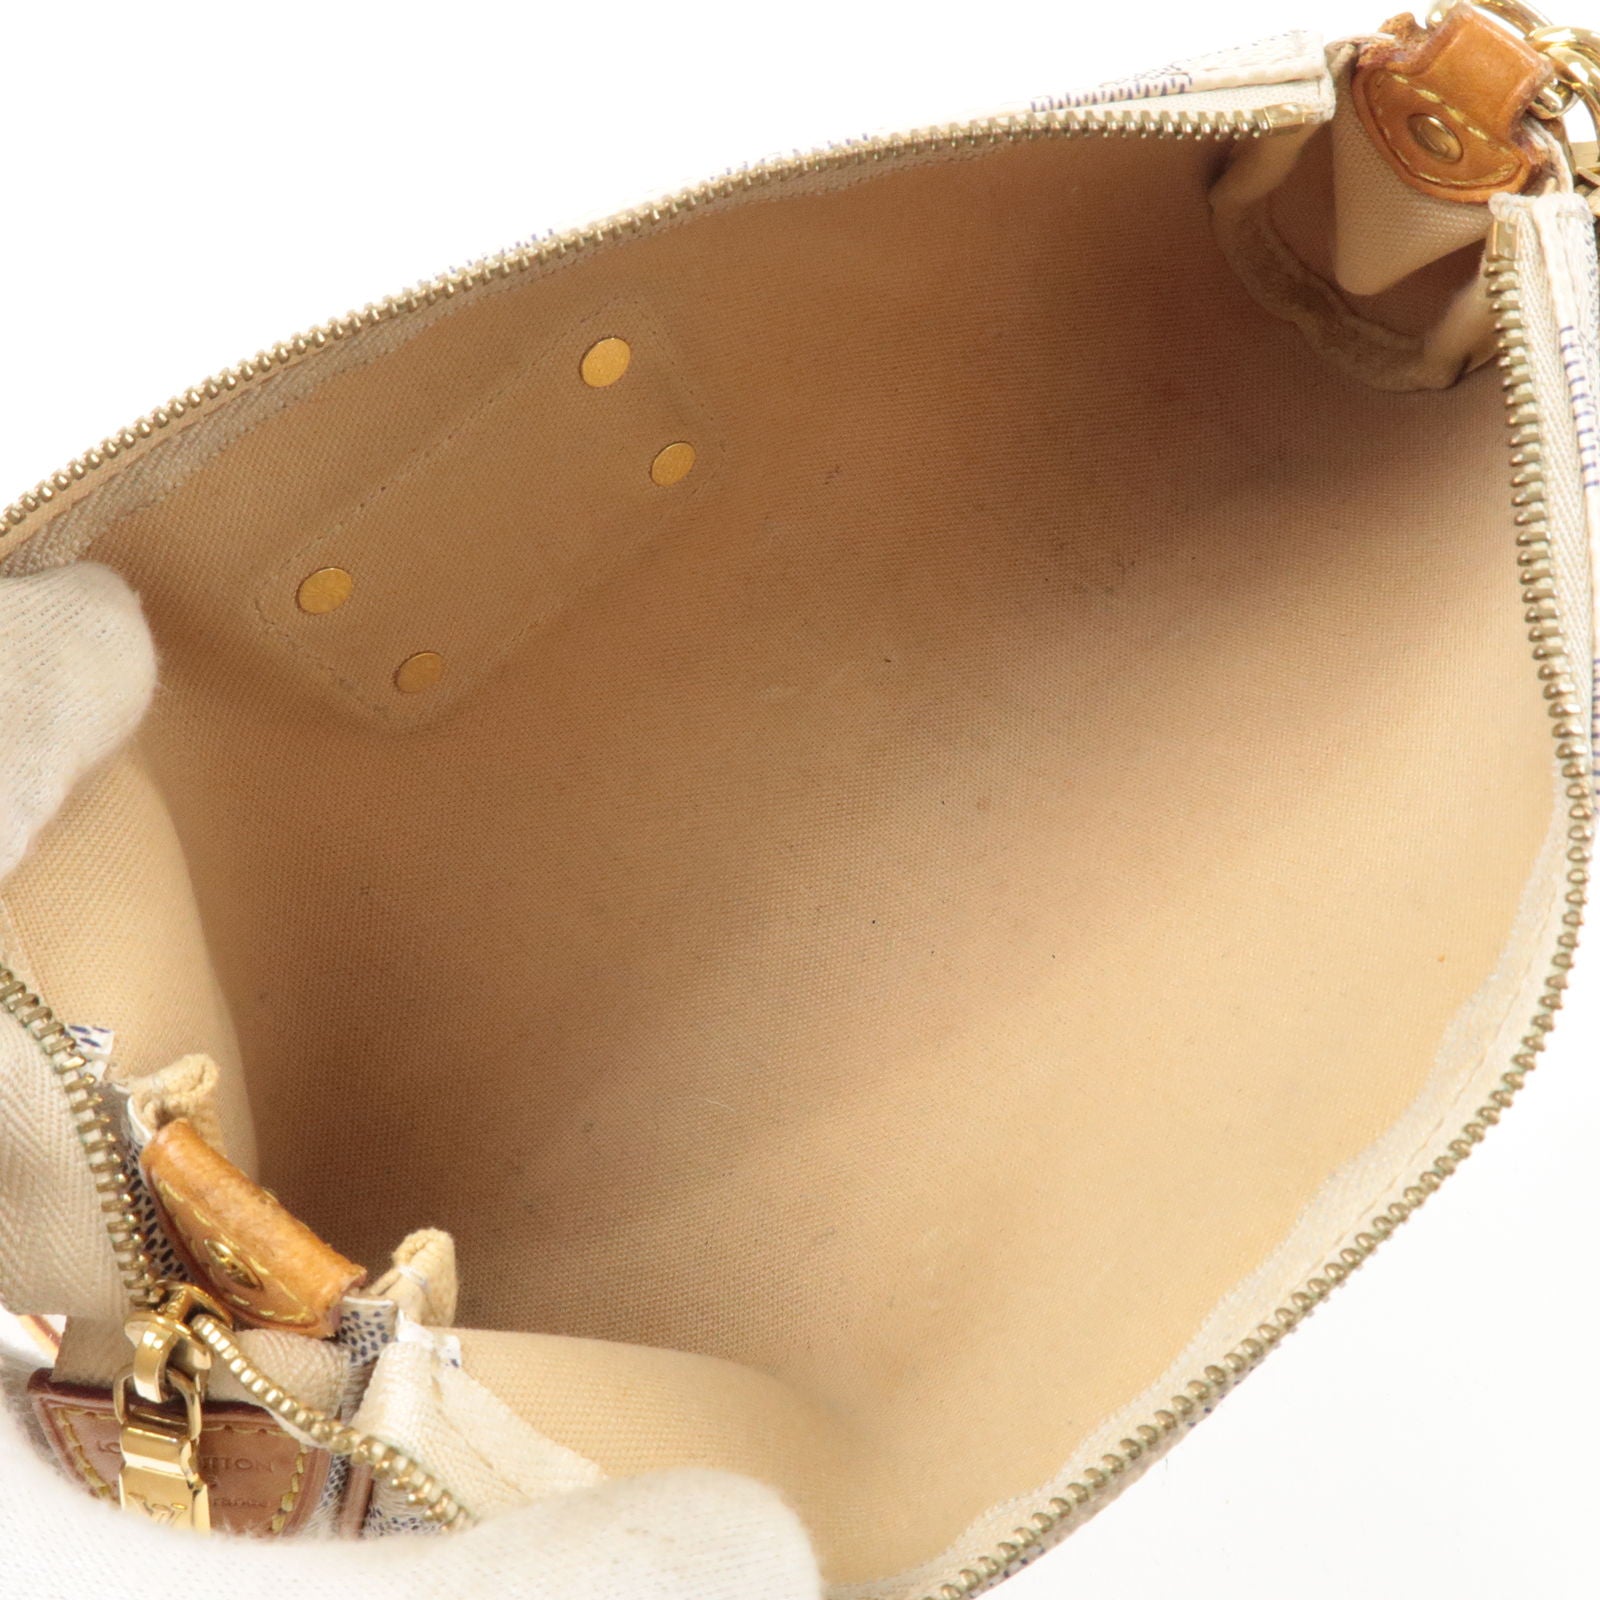 Pre-owned Louis Vuitton Twist One Handle Leather Handbag In Orange